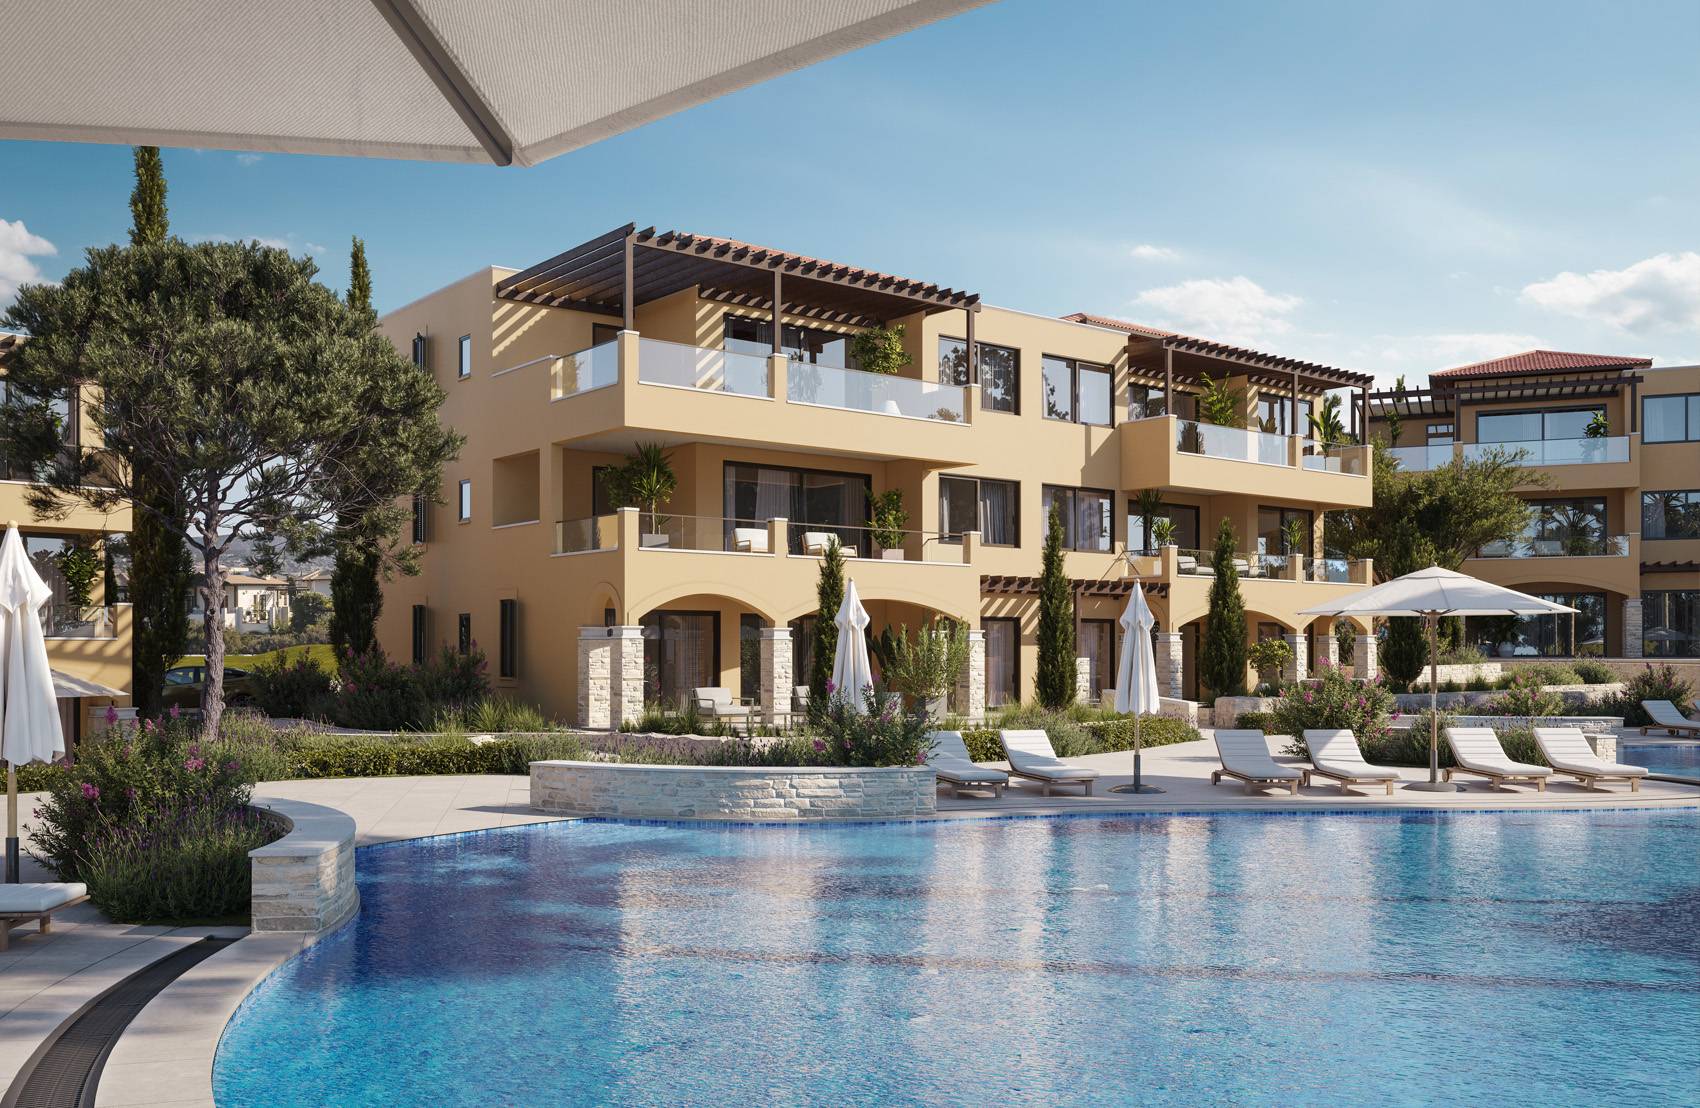 Aphrodite Hills, Cyprus - Premium Apartments for Sale